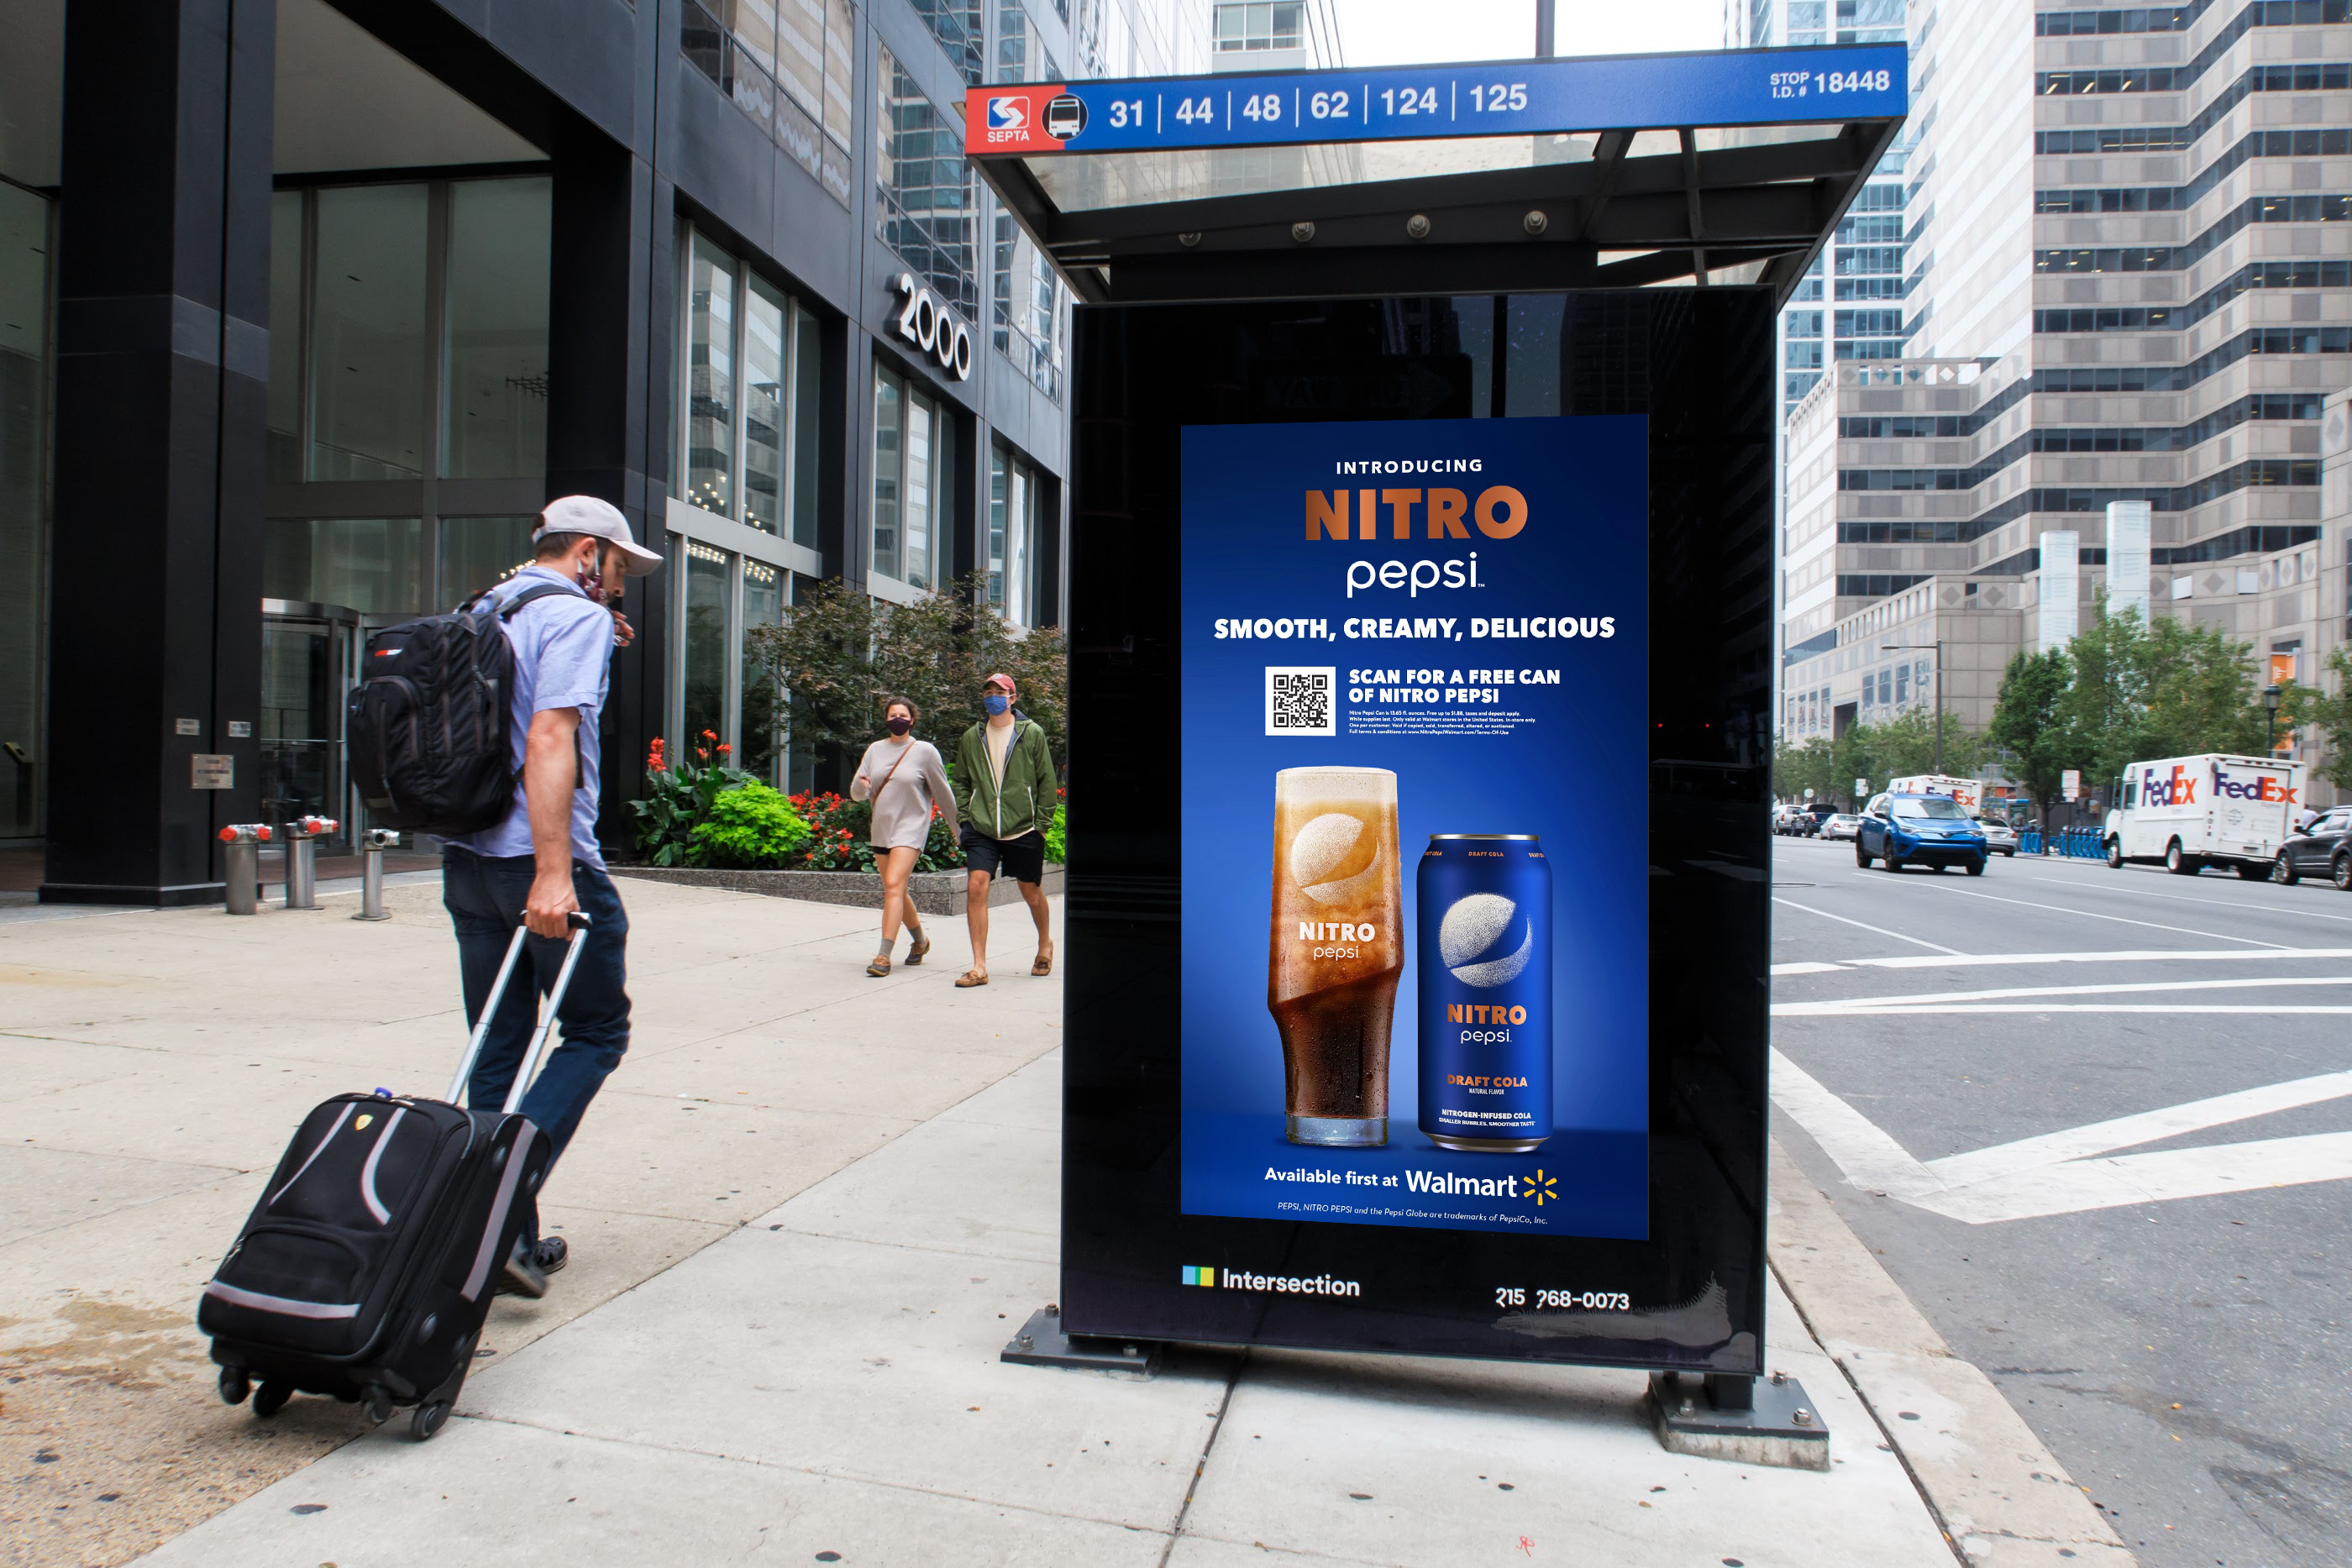 Pepsi Nitro Bus Shelter Ad